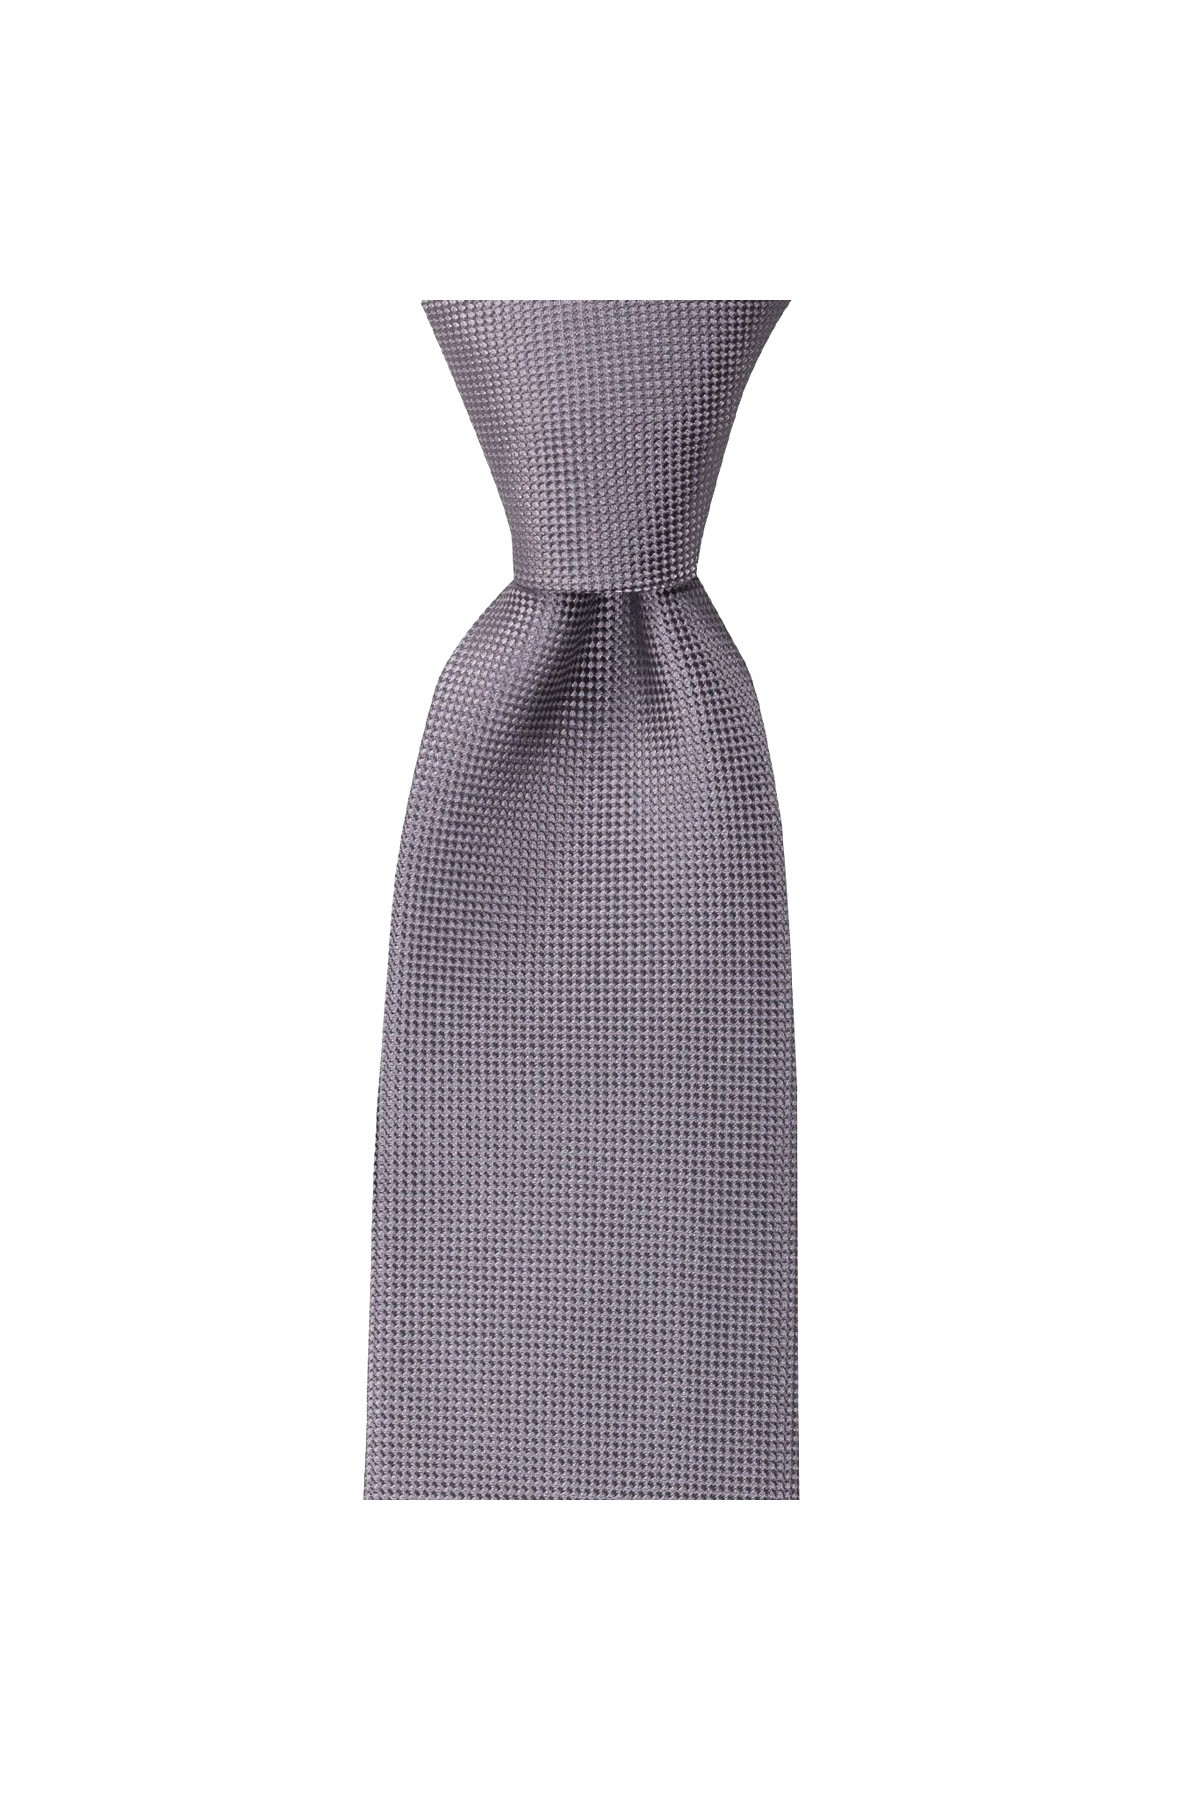 Düz renkli 8 cm genişliğinde mendilli kravat - Gri